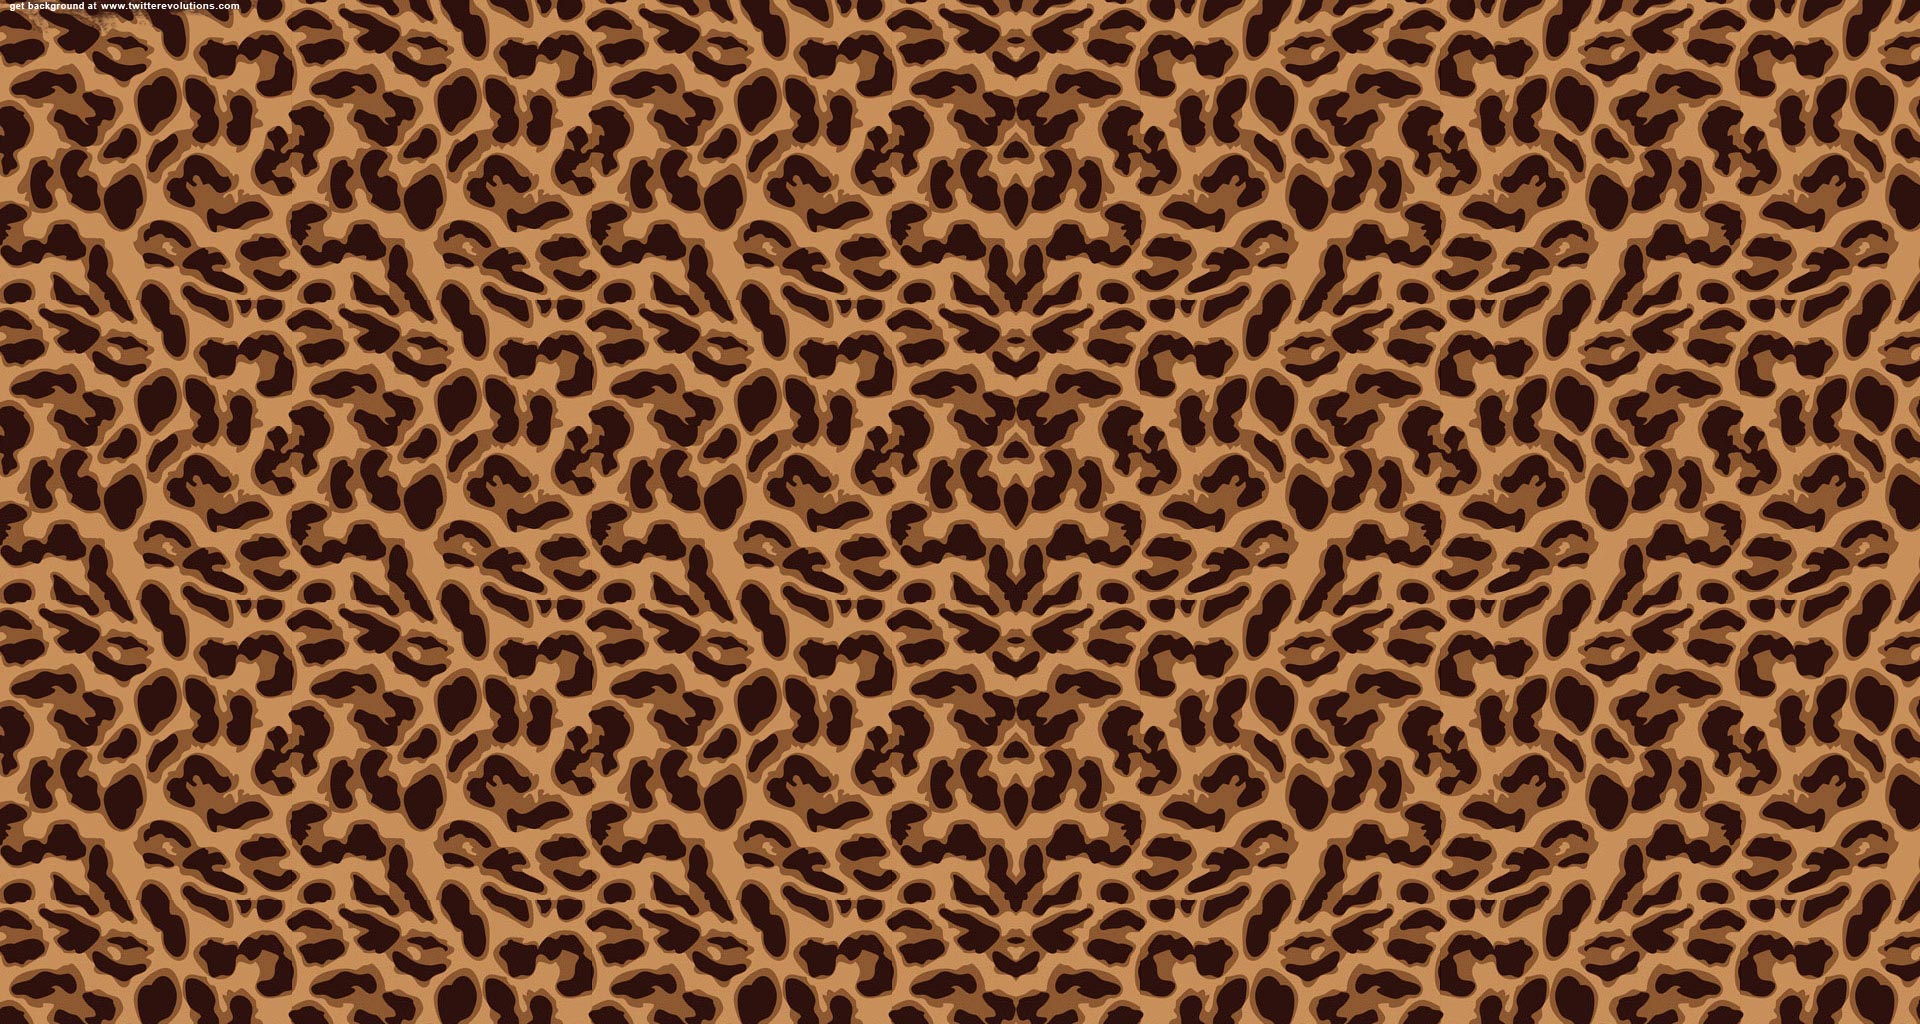 Leopard print background   Twitterevolutions